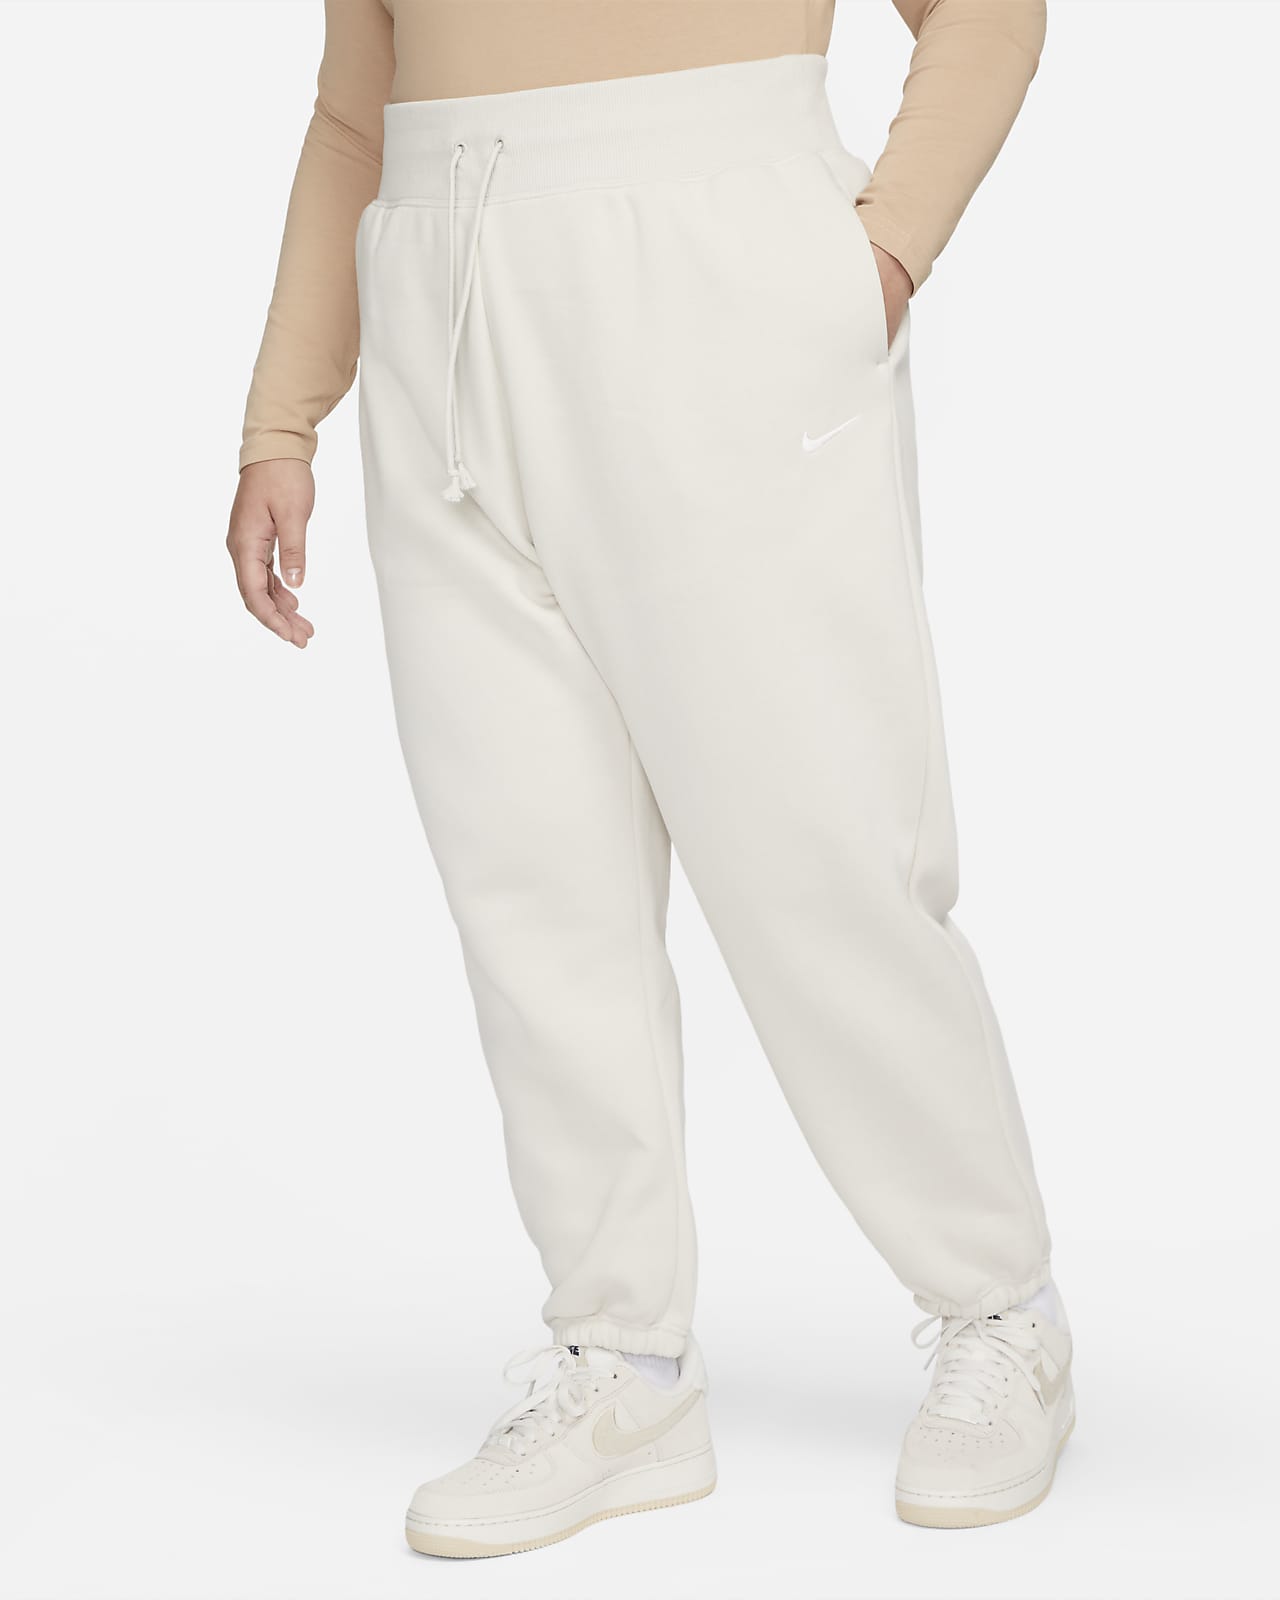 Pantalon de survêtement taille haute oversize Nike Sportswear Phoenix Fleece pour Femme (grande taille)